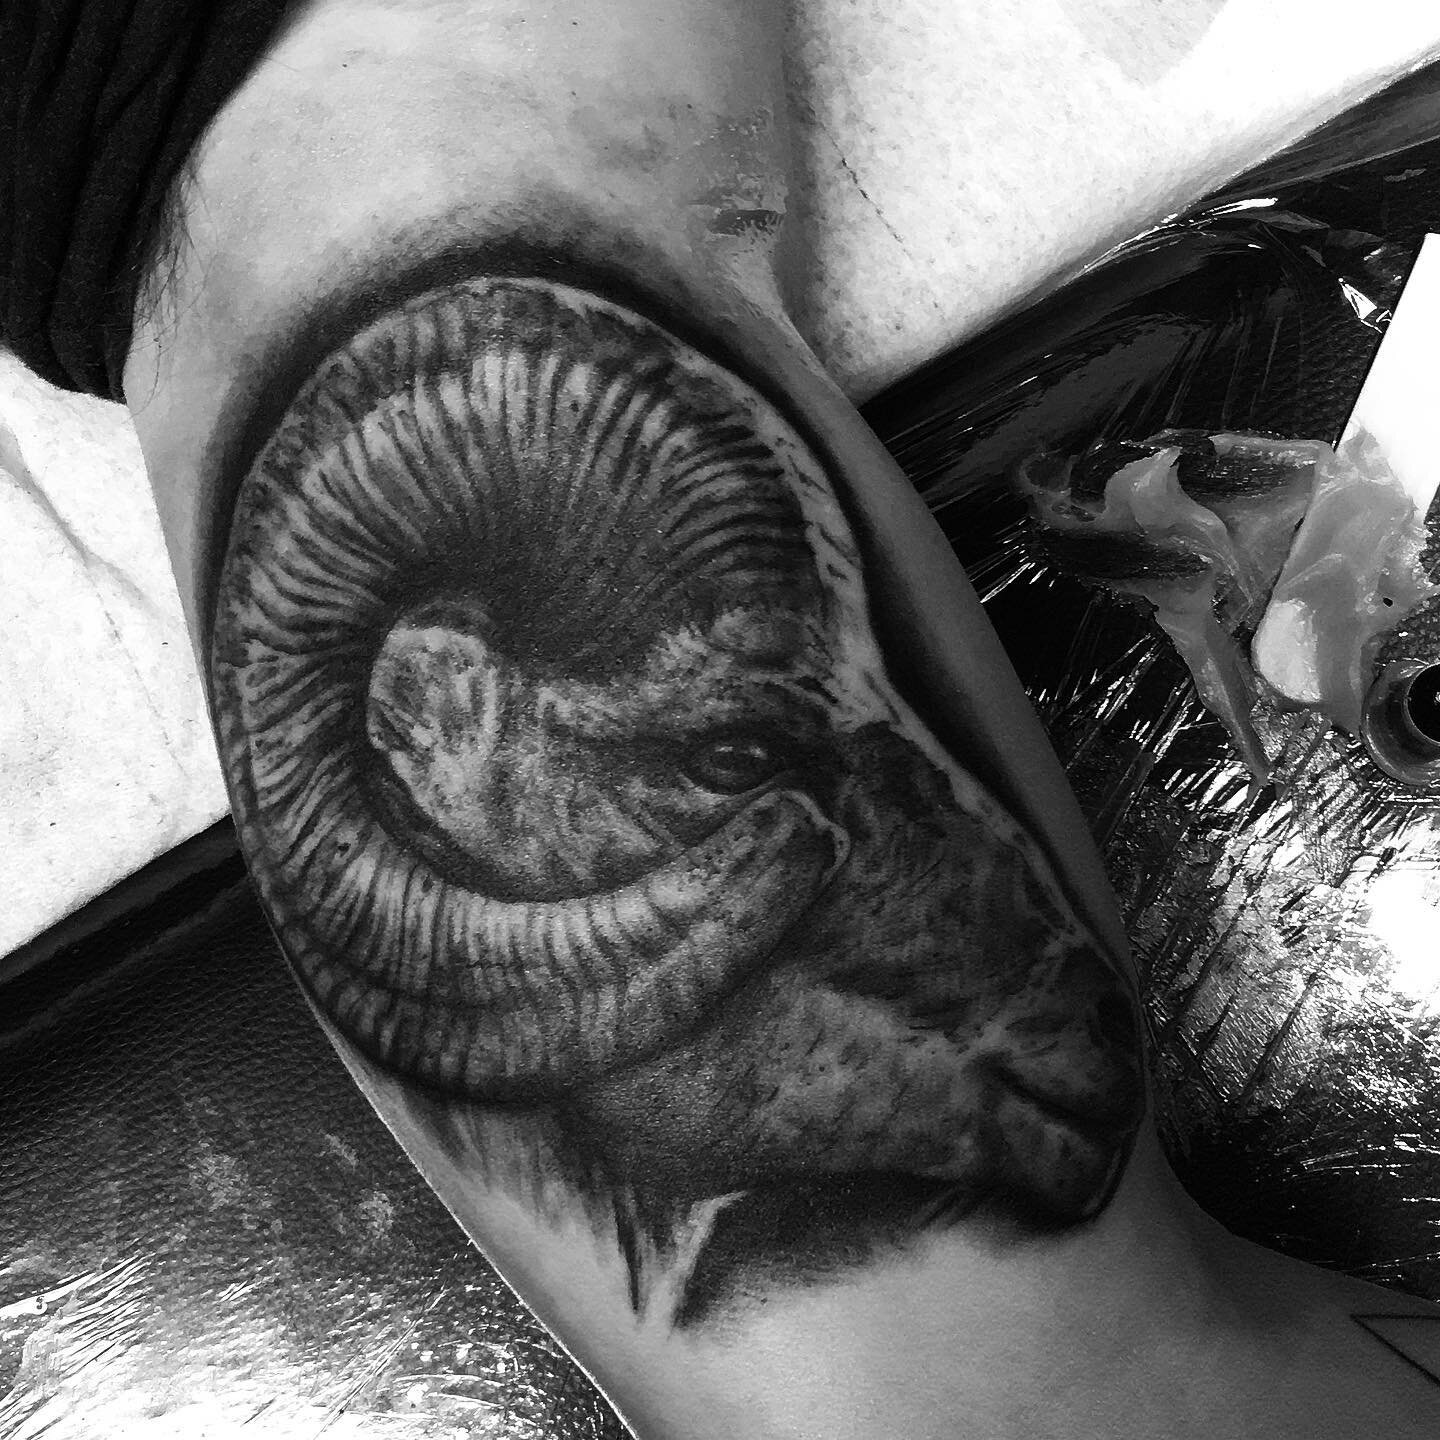 Little it of work #Tattoo #tattoos #darkart #blackandwhite #artist #art #inkjecta #fusionink #instadaily #instagood #design #inkmaster #ink #inked  #instatattoo #sanfrancisco #sanjose  #bayarea #california #photooftheday #inklife #drawing #besttattoo